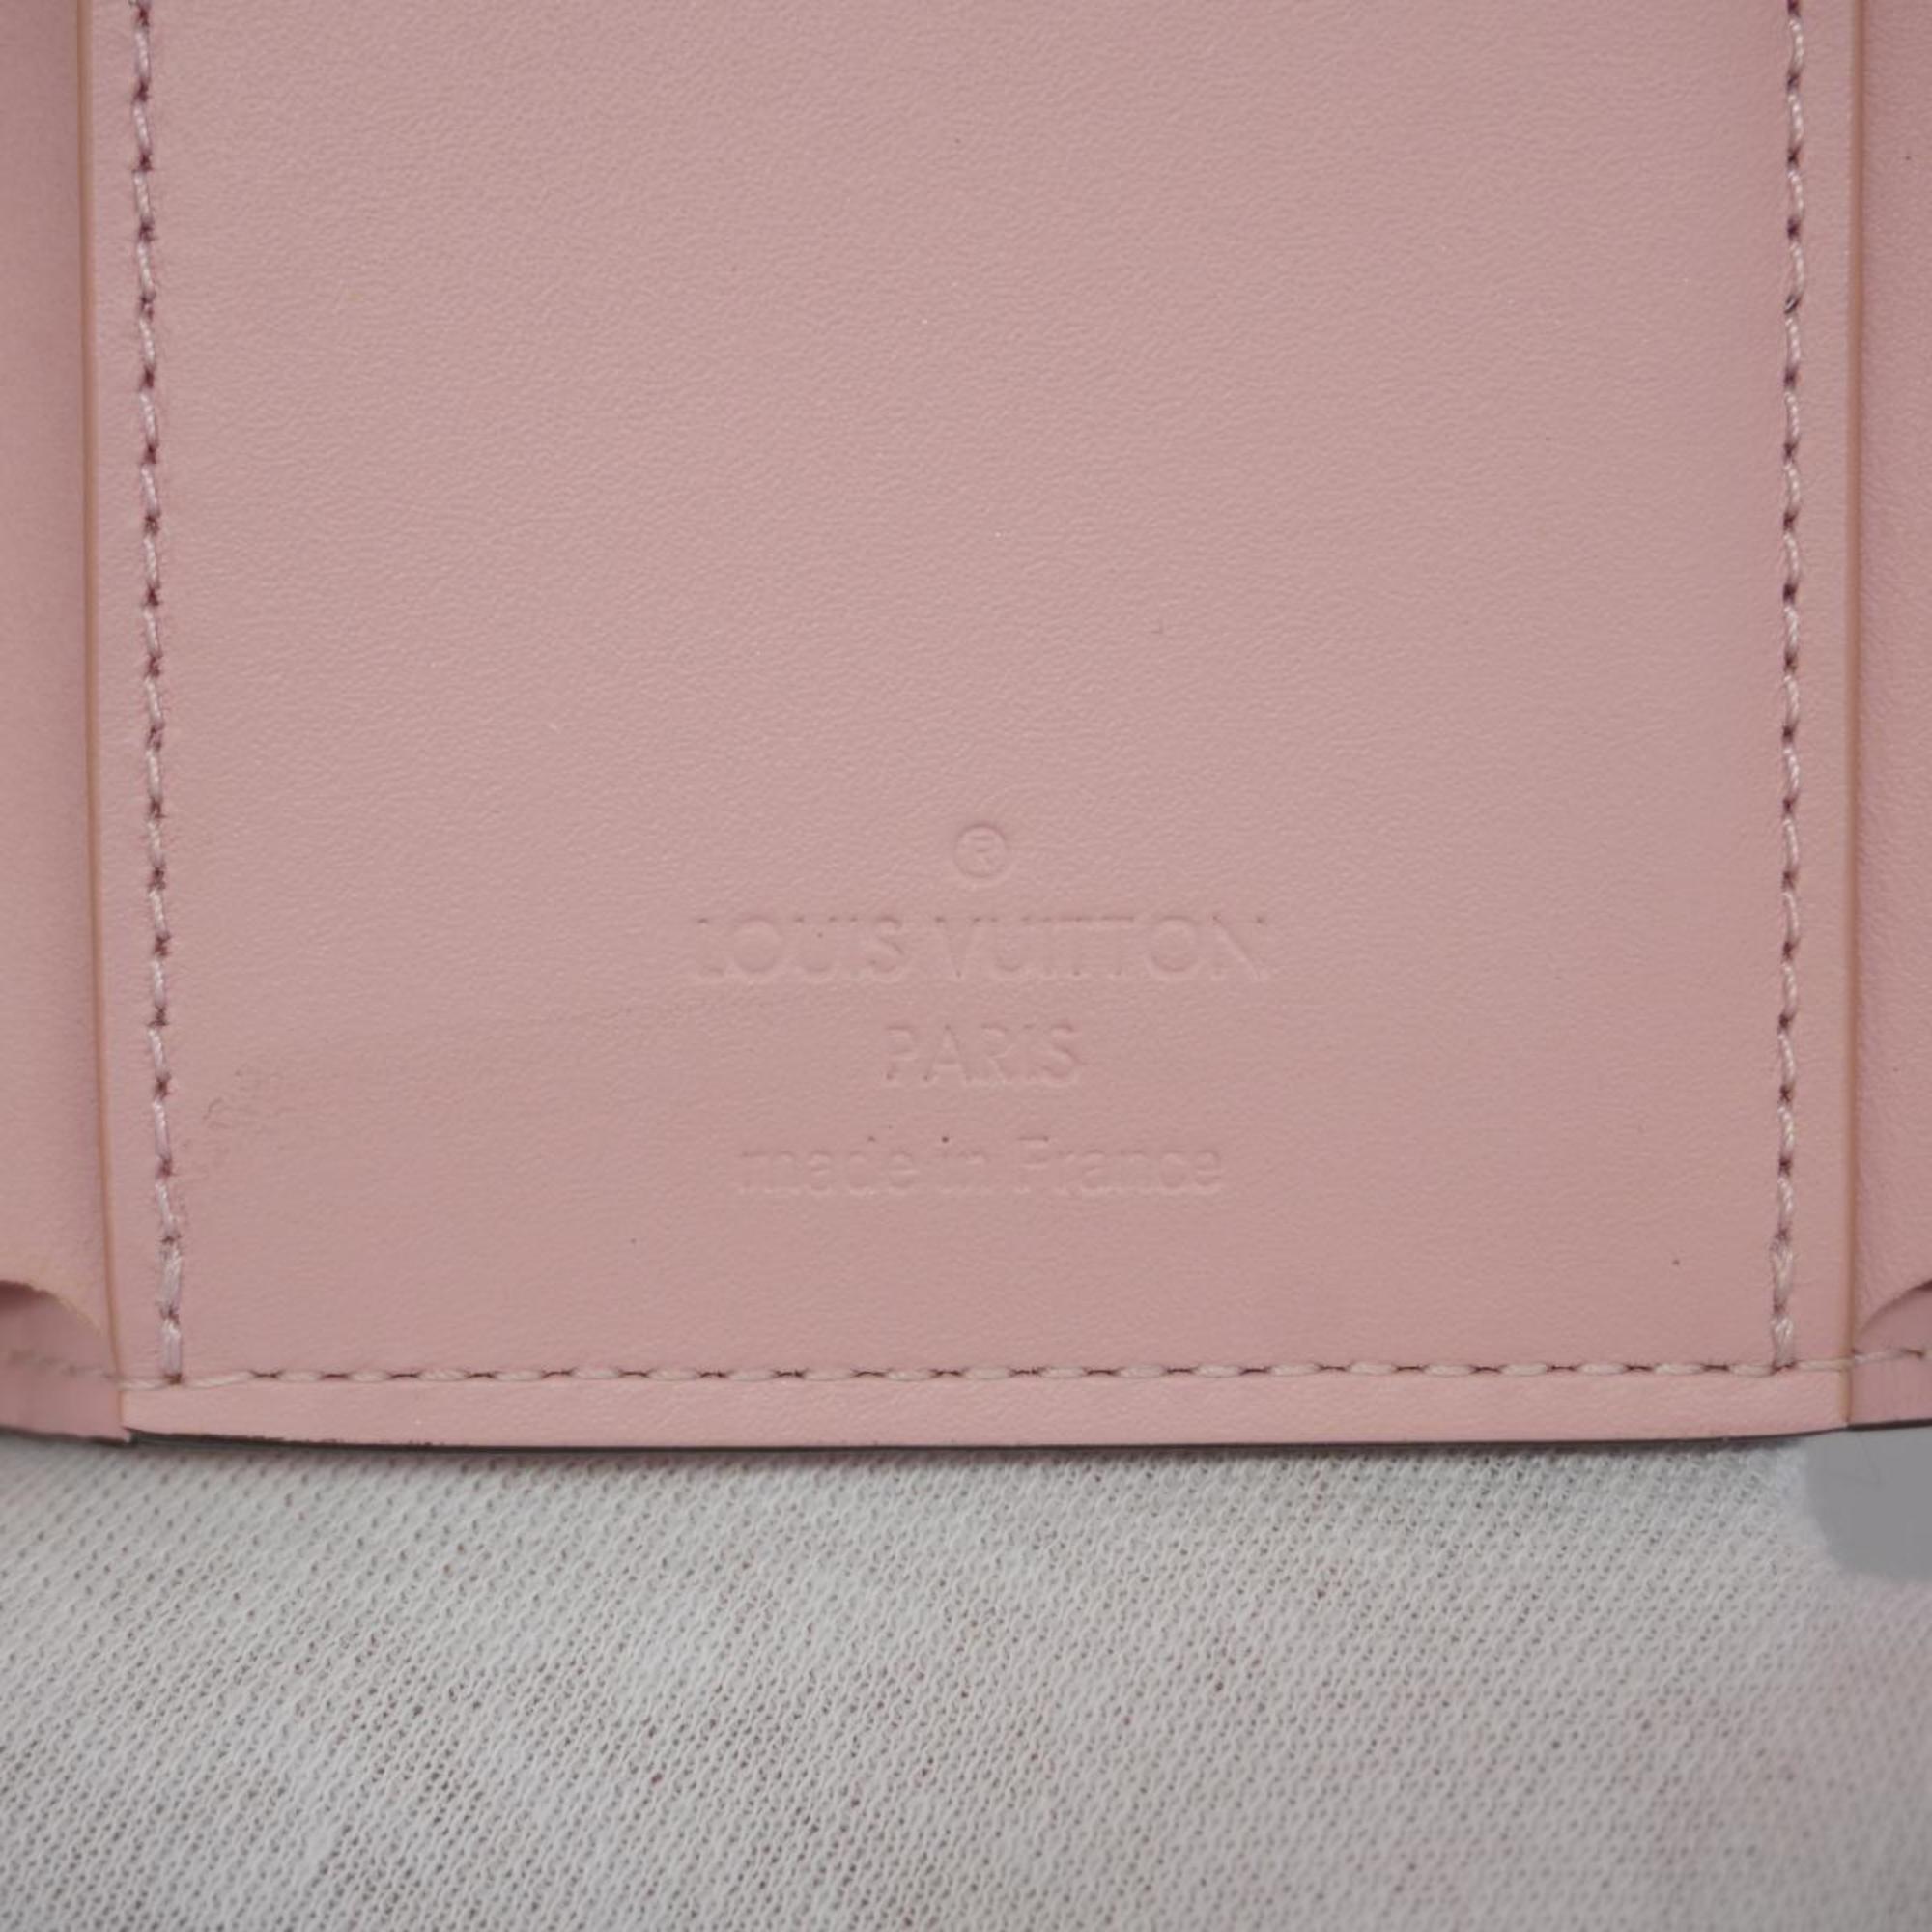 Louis Vuitton Tri-fold Wallet Vernis Portefeuille Victorine M62428 Rose Ballerine Ladies